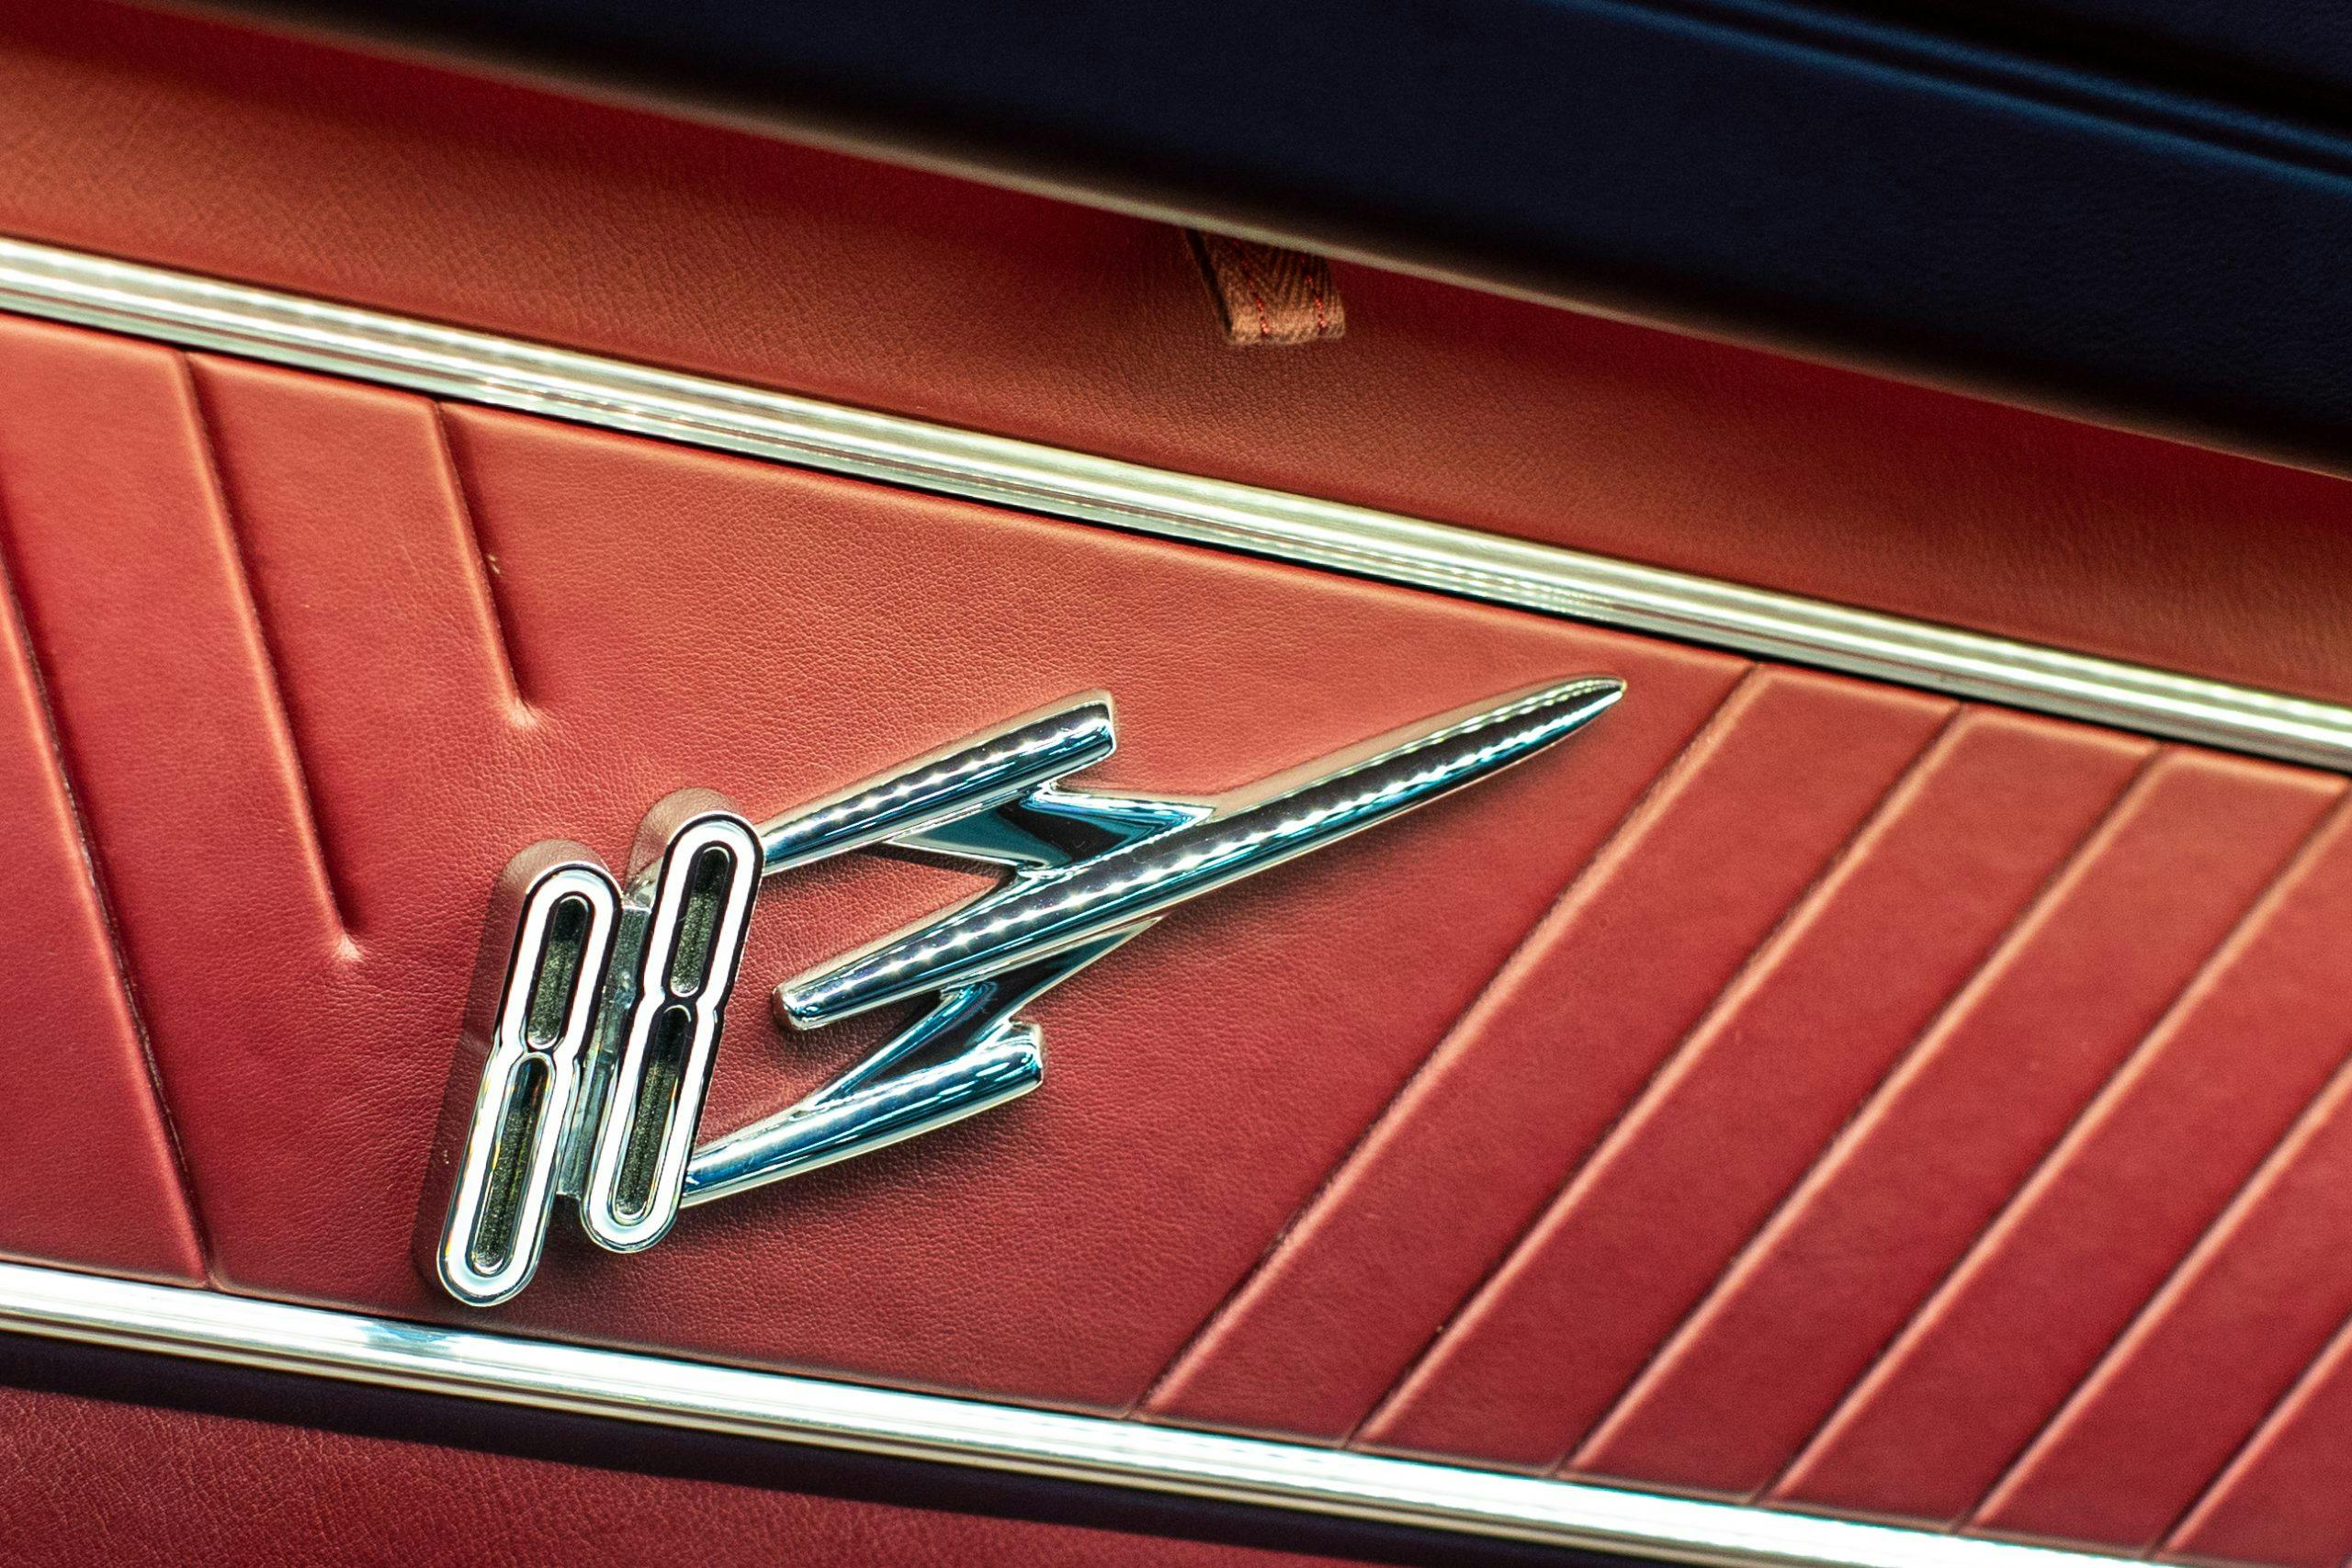 1950 Oldsmobile interior